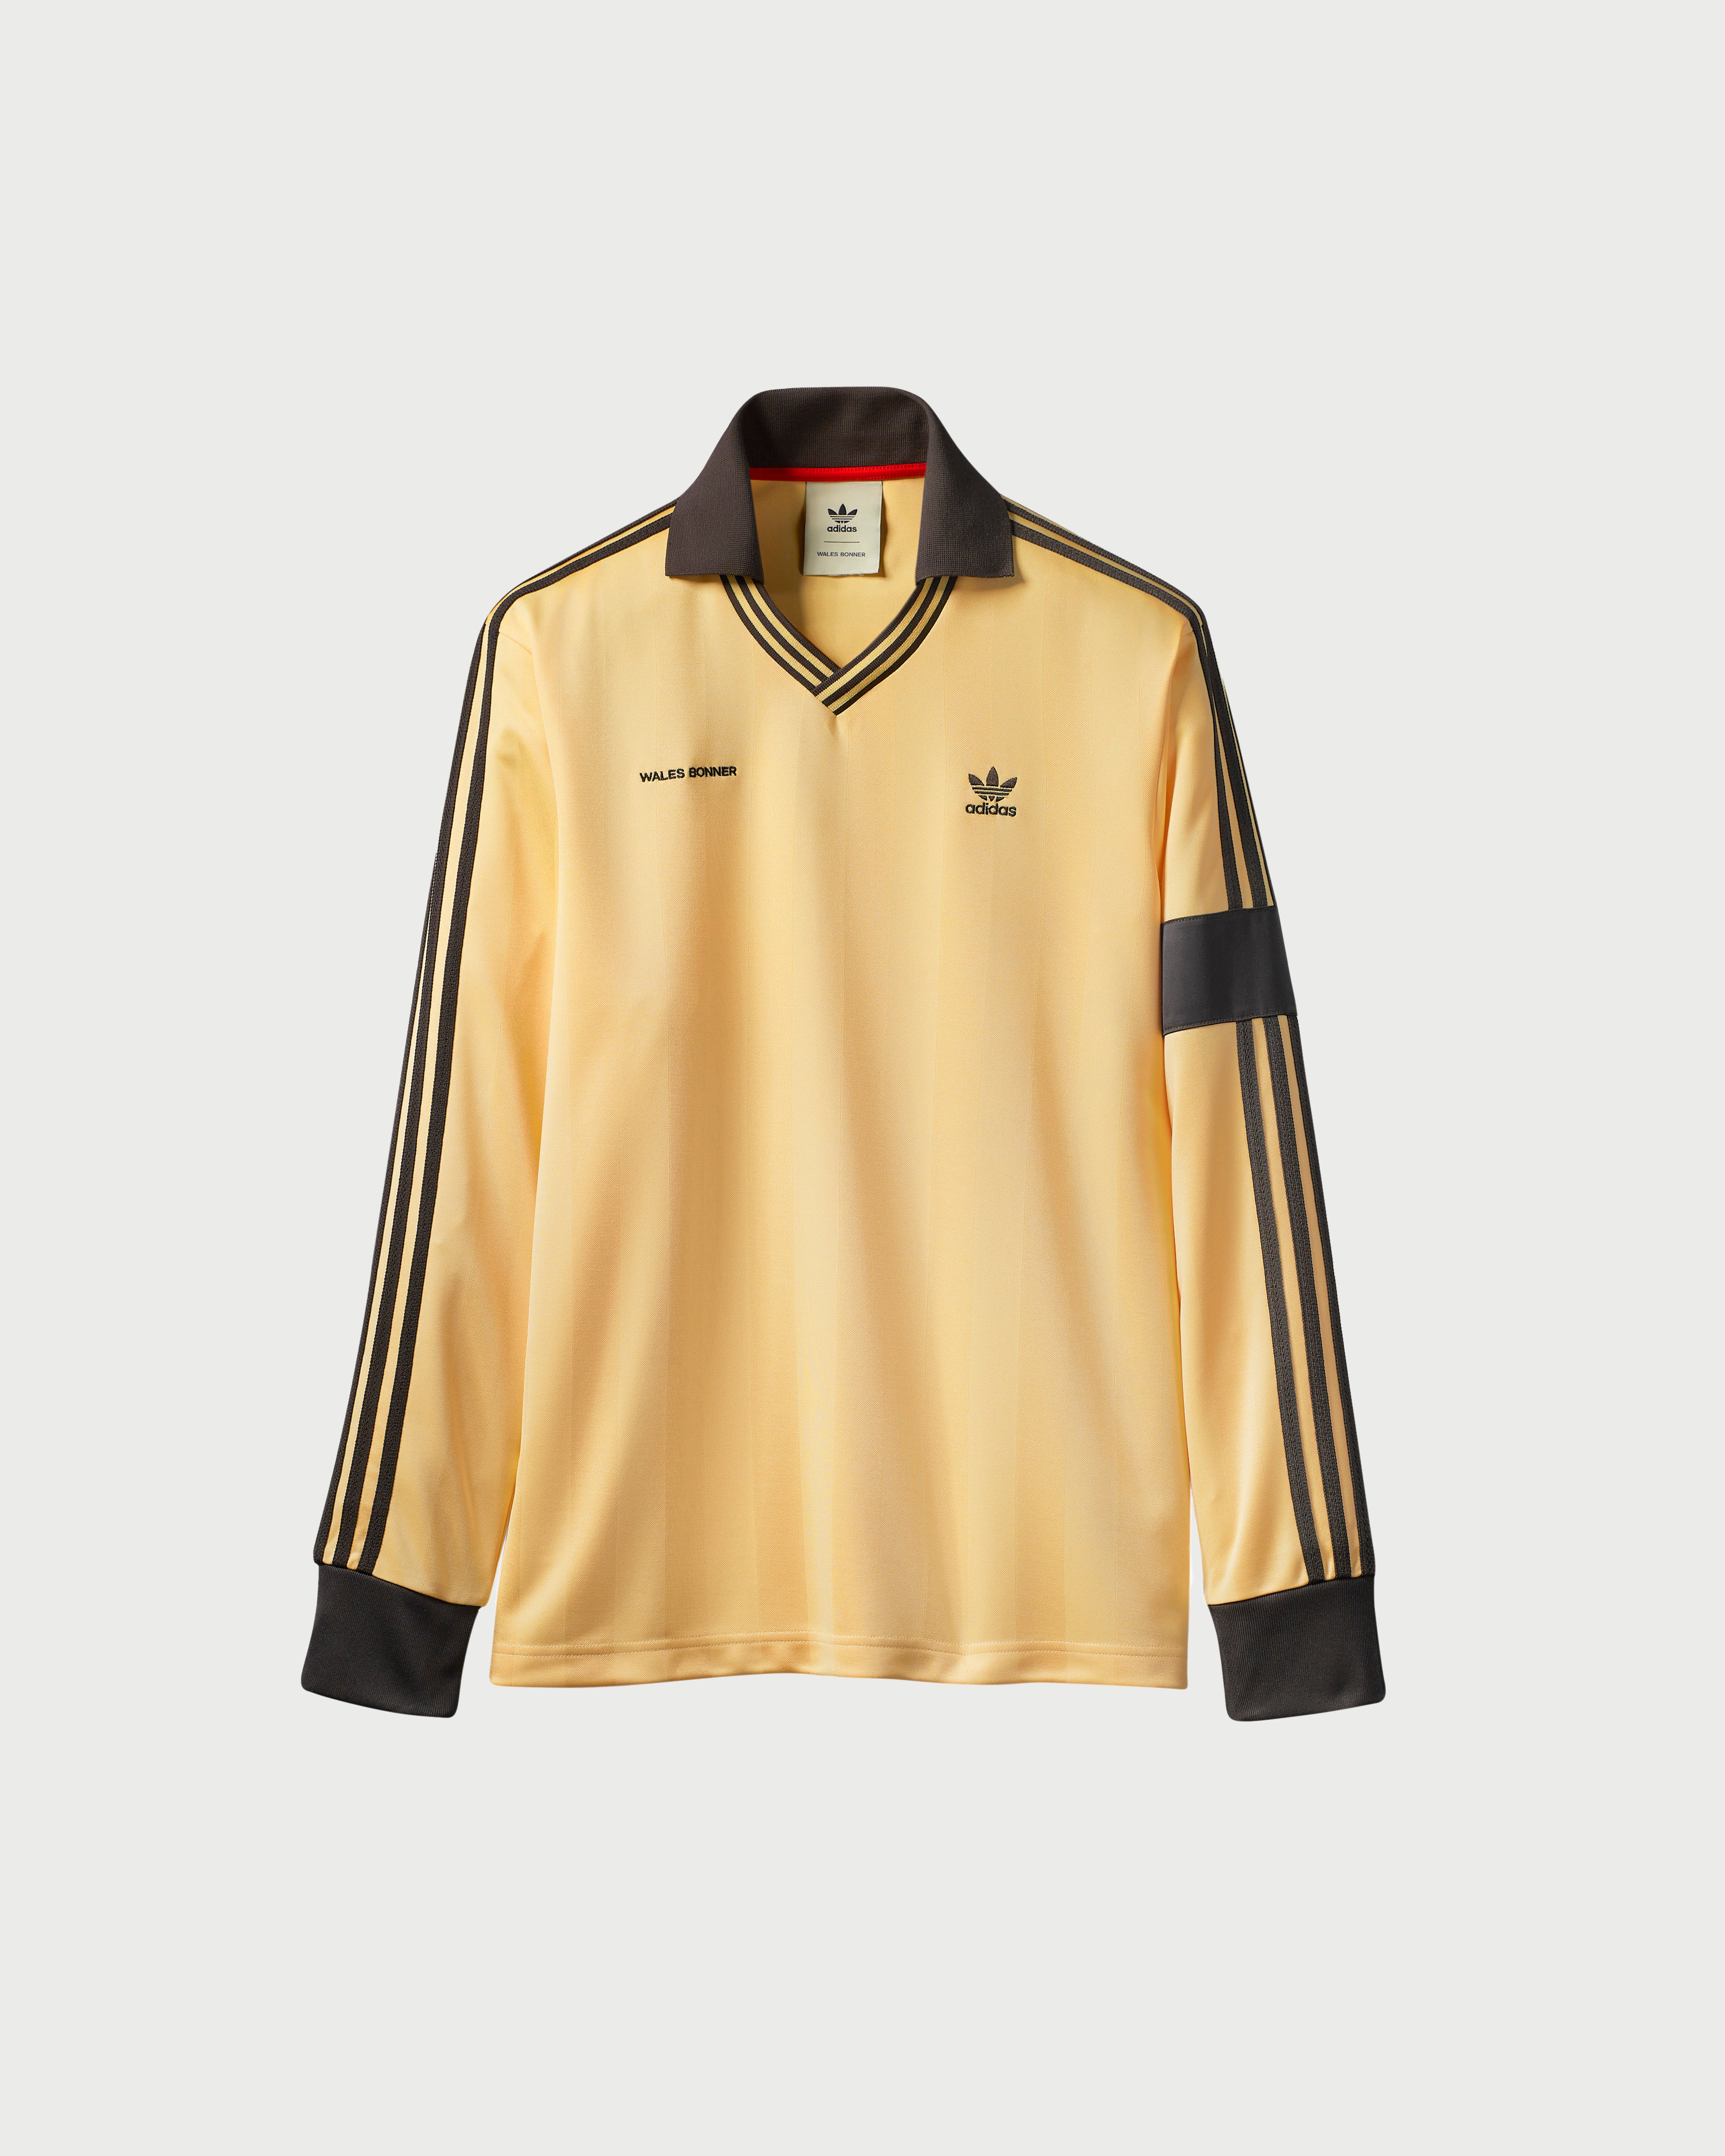 Adidas x Wales Bonner - Football Jersey Orange Tint - Clothing - Yellow - Image 1